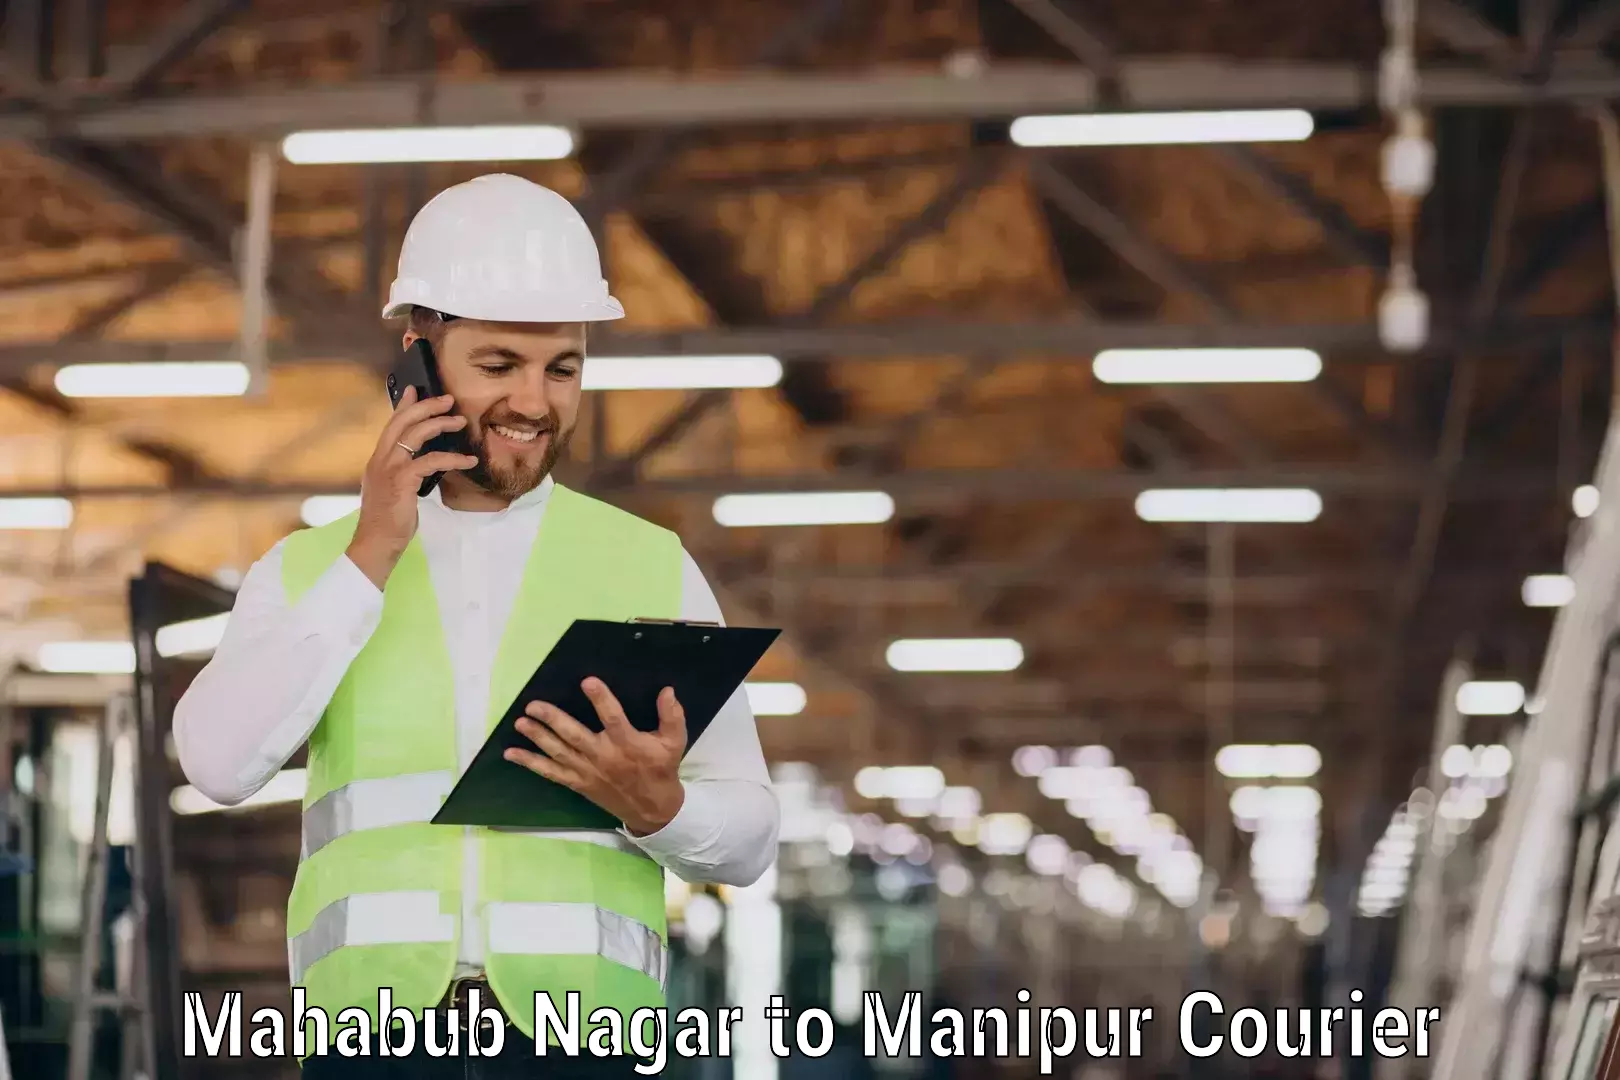 Courier service comparison Mahabub Nagar to Kakching